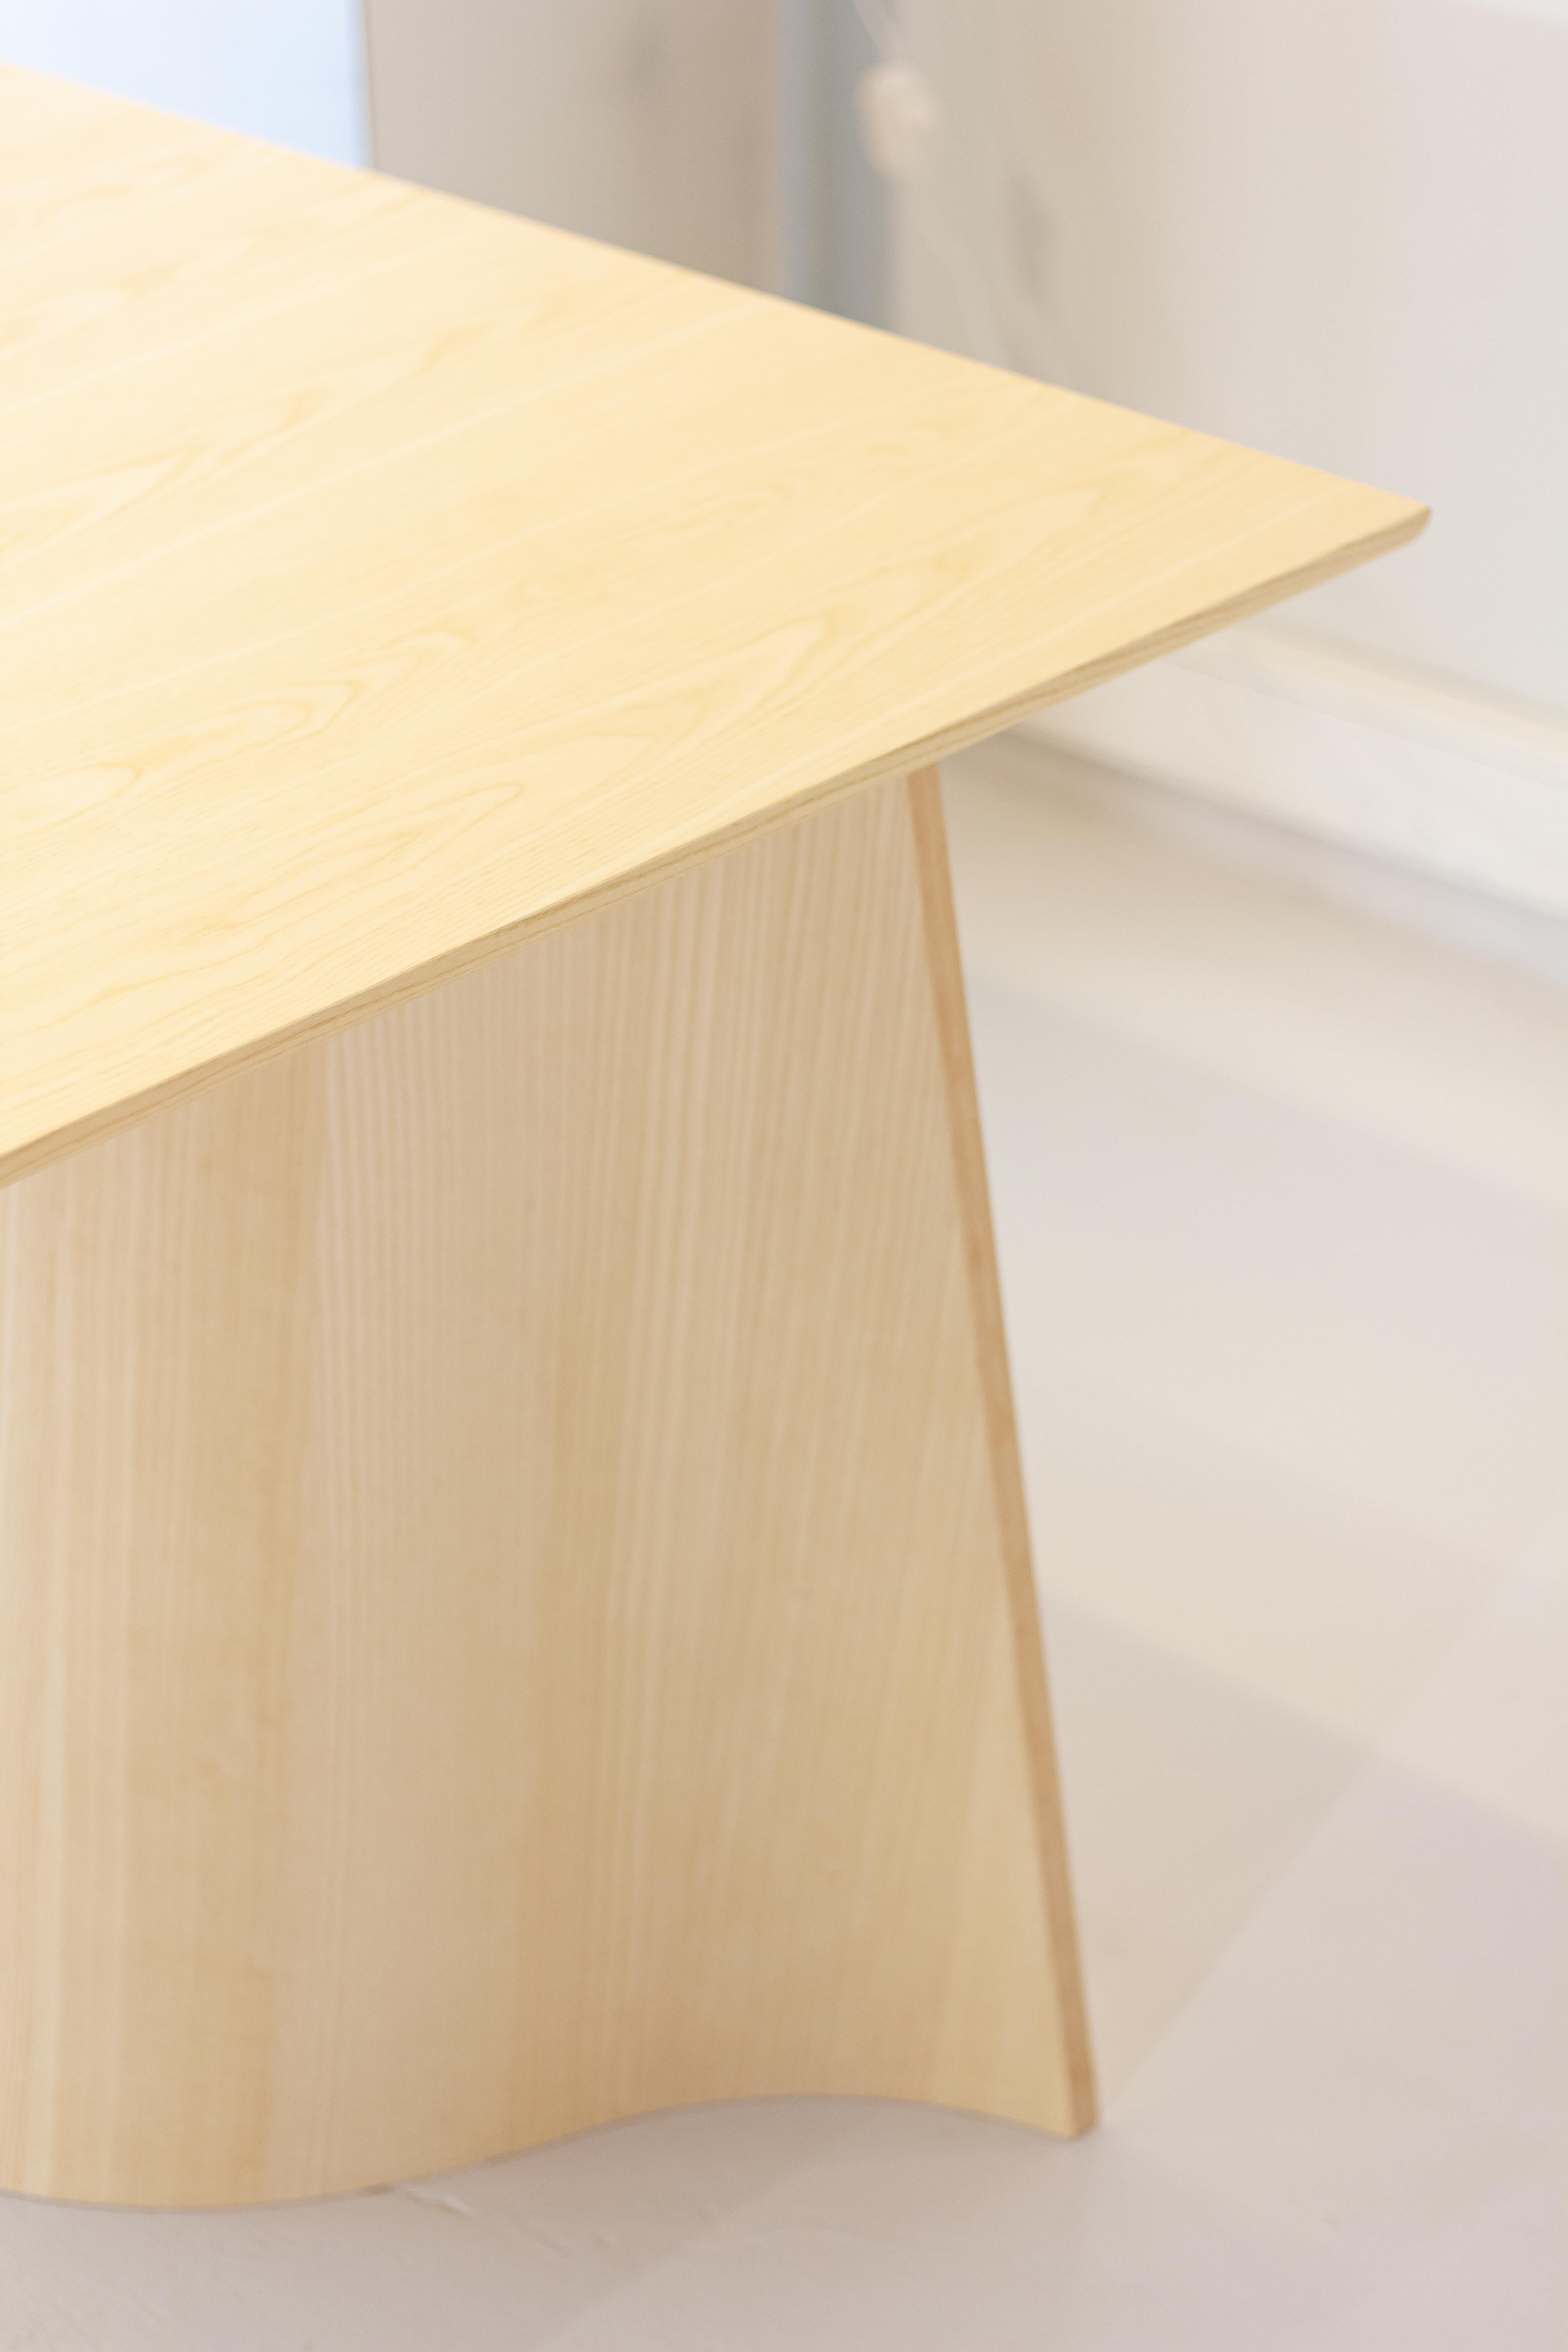 Veneer Trestle Table In New Condition For Sale In København K, 84